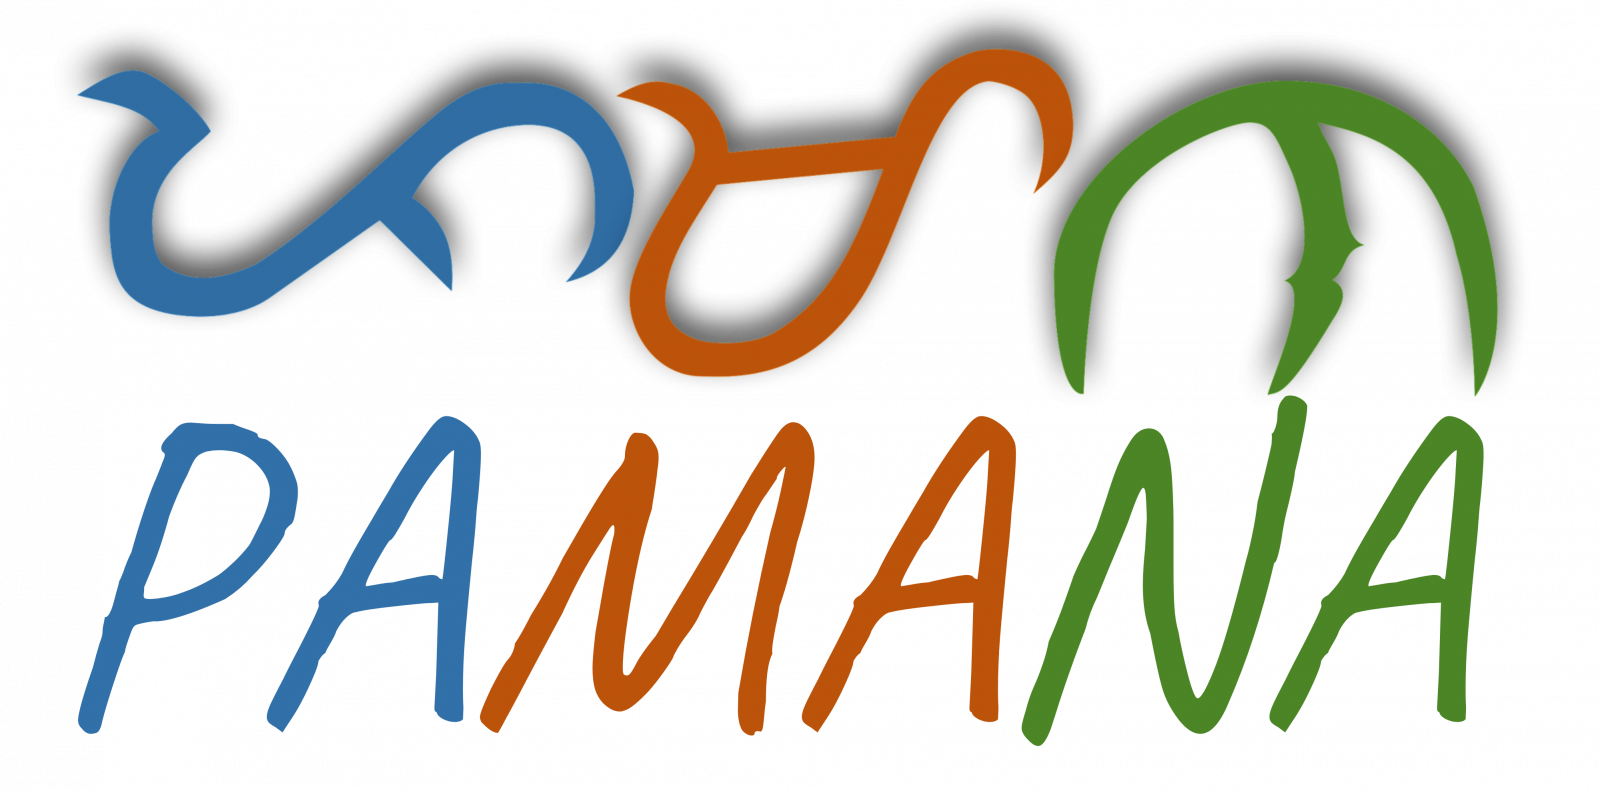 Project Pamana logo